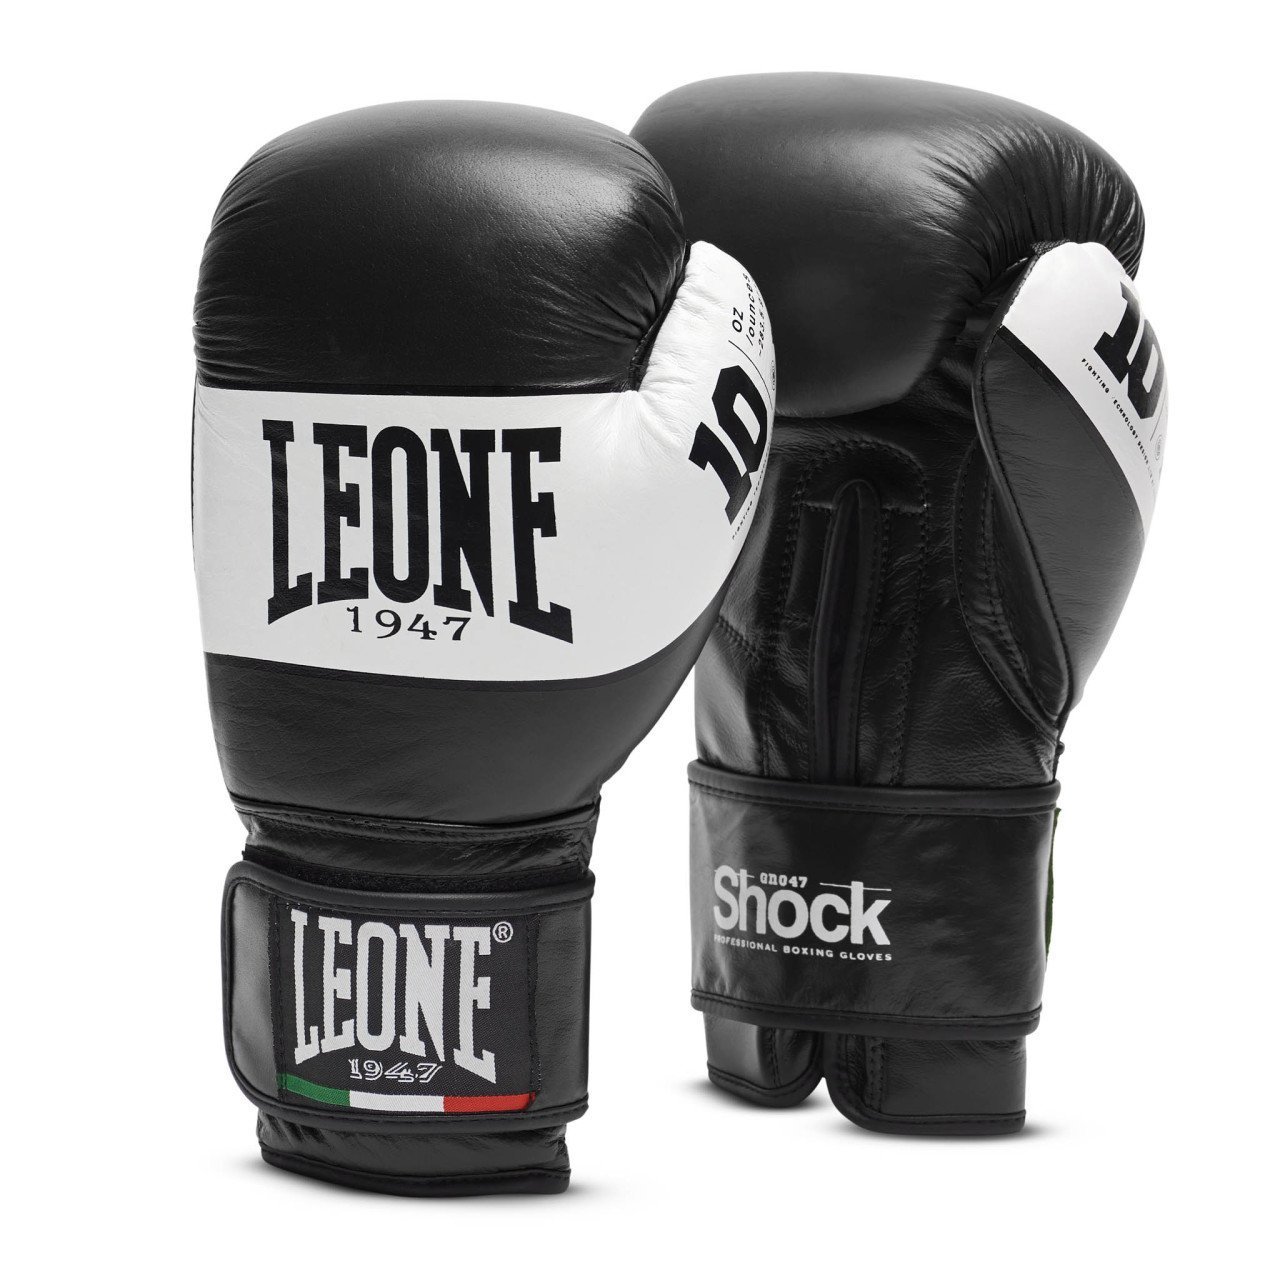 Глори бокс. Боксерские перчатки Leone 1947. Боксерские перчатки Leone 1947 10 oz. Leone 1947 Contest 10 oz перчатки.